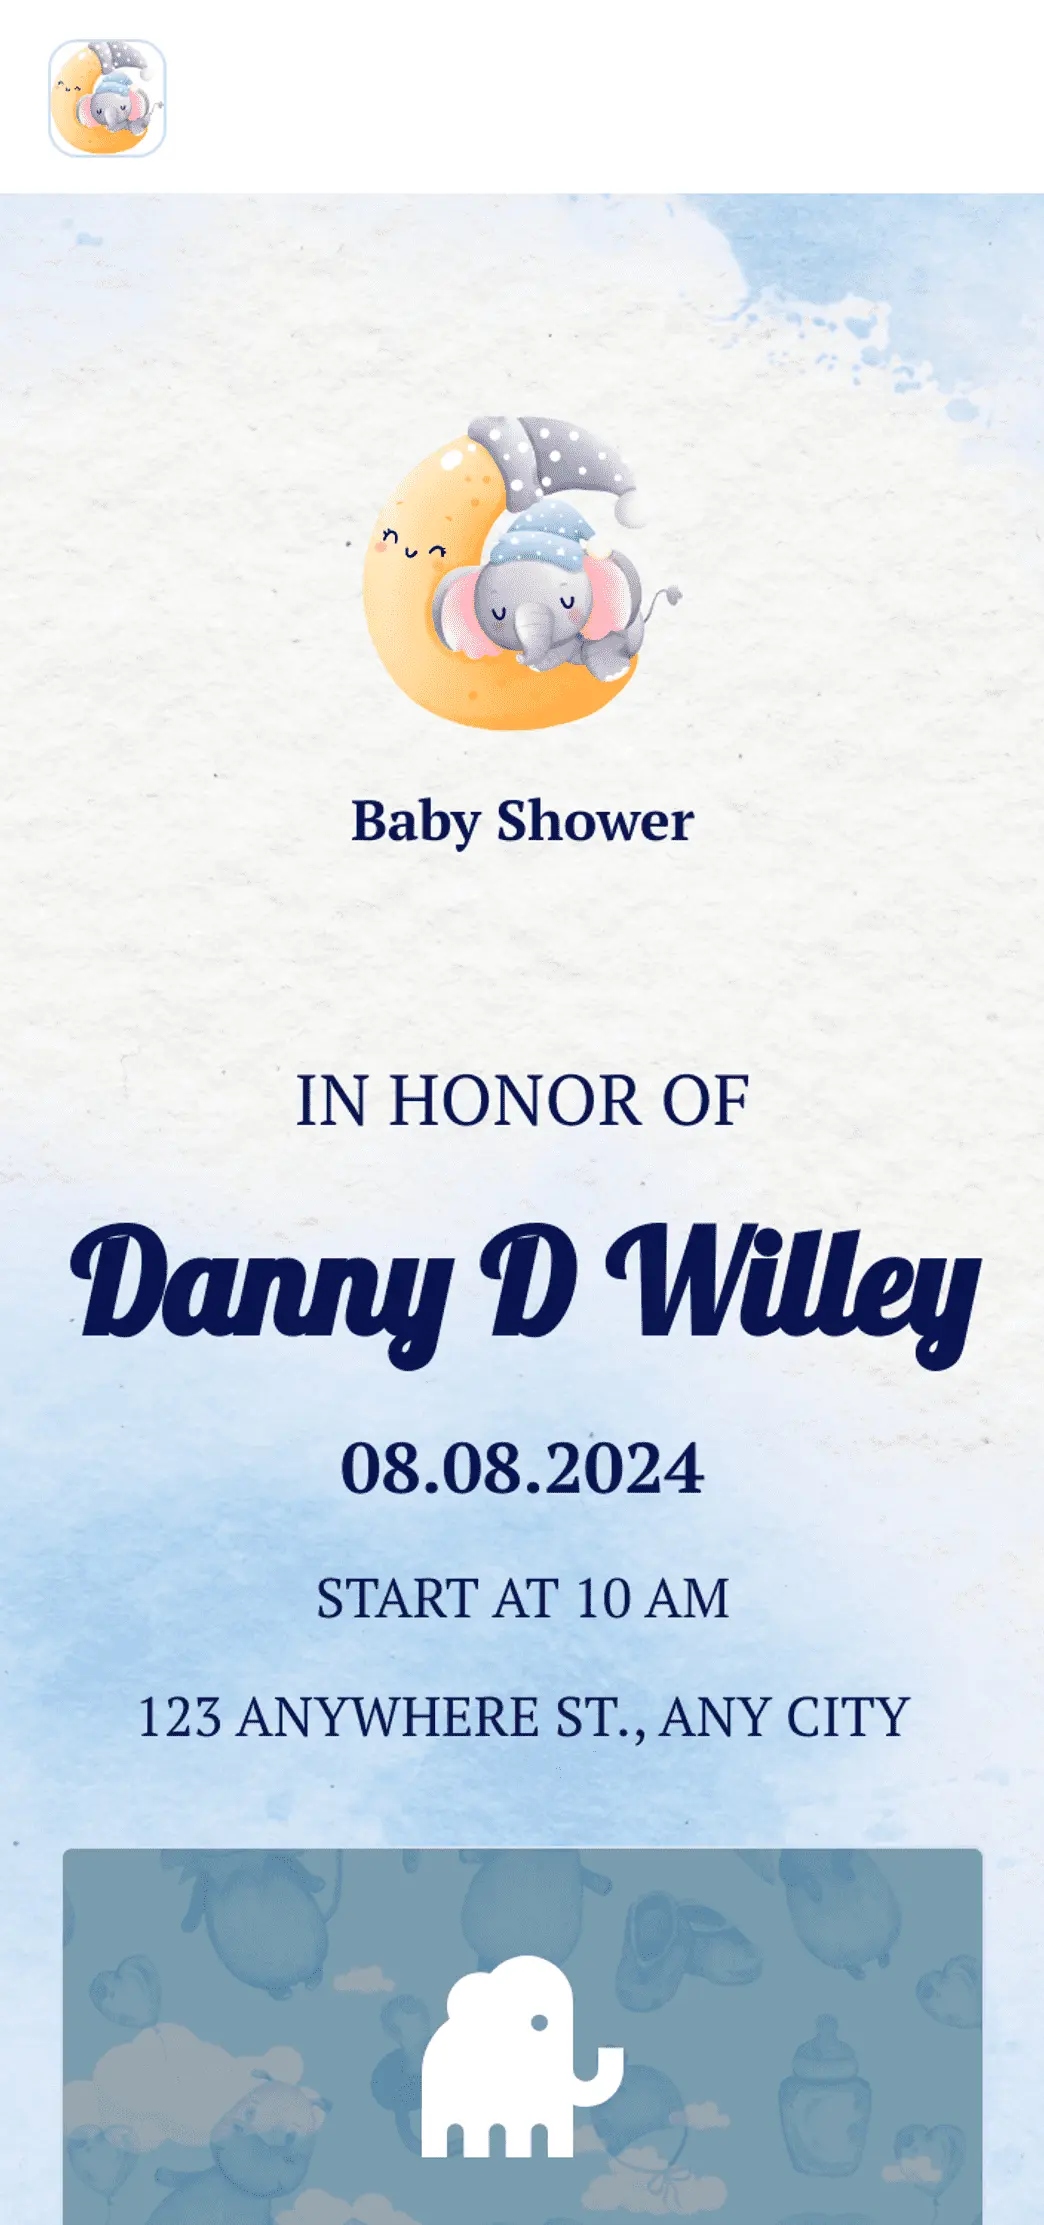 Baby Shower Invitation App